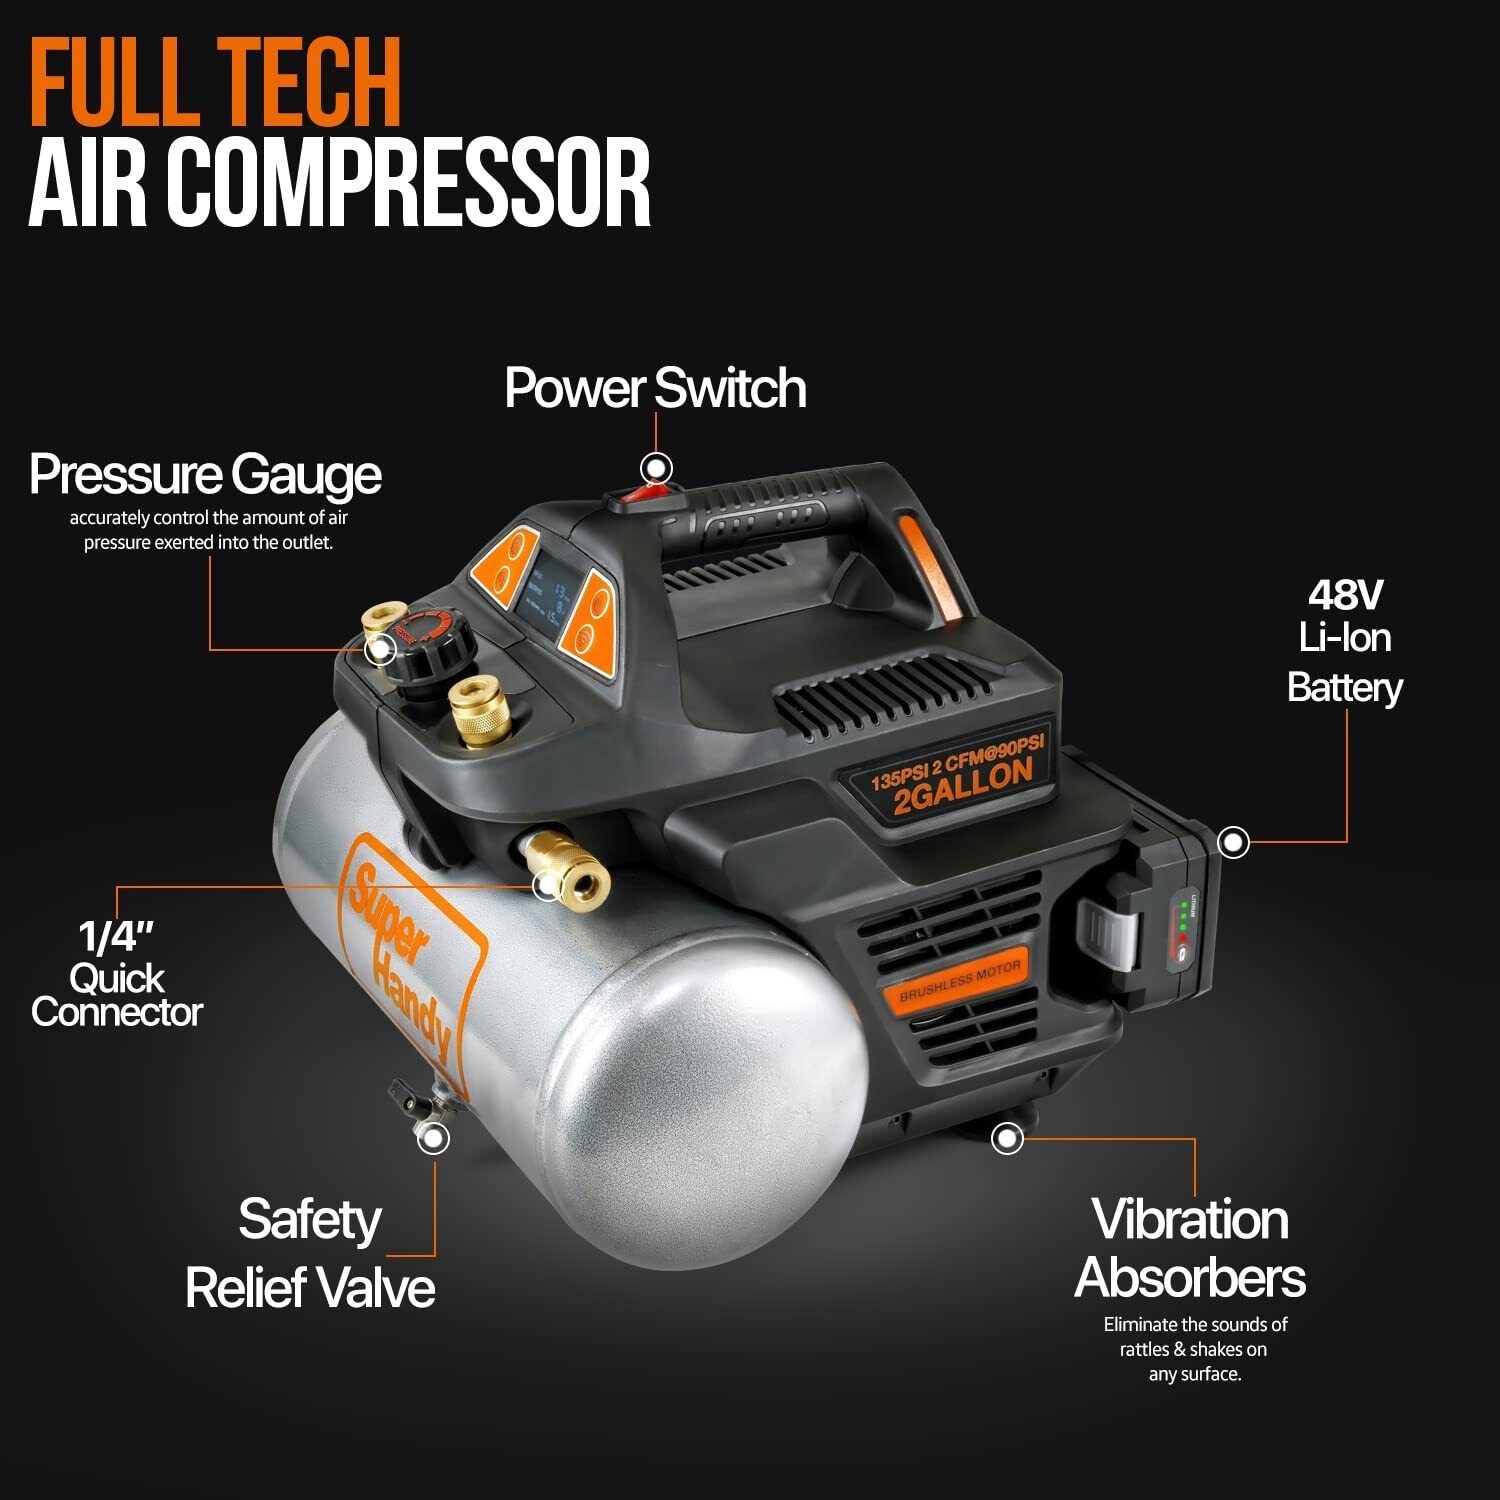 SuperHandy 2-Gal 135 PSI Cordless Air Compressor